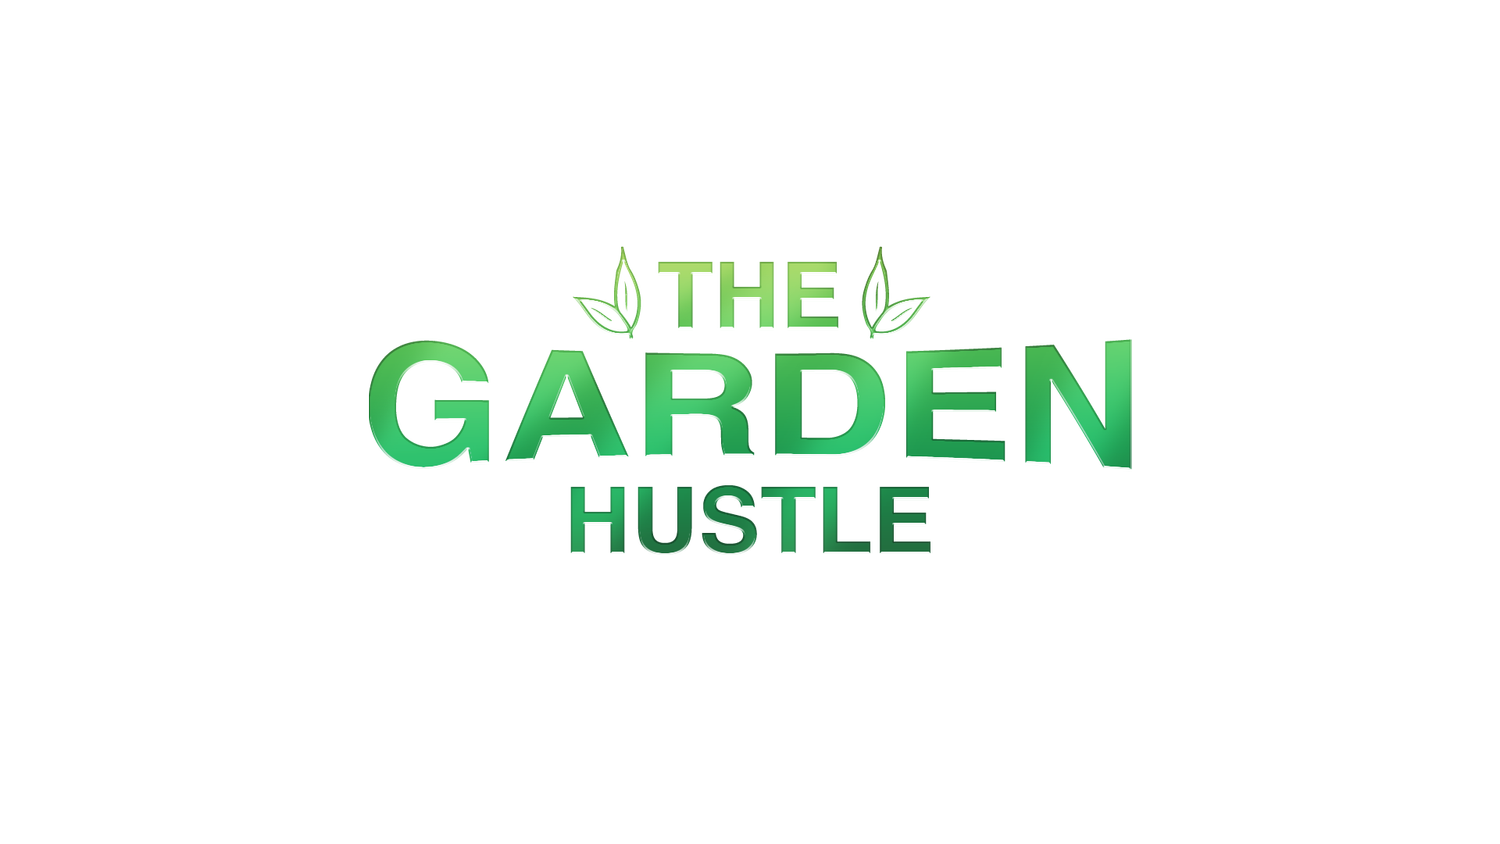 The Garden Hustle